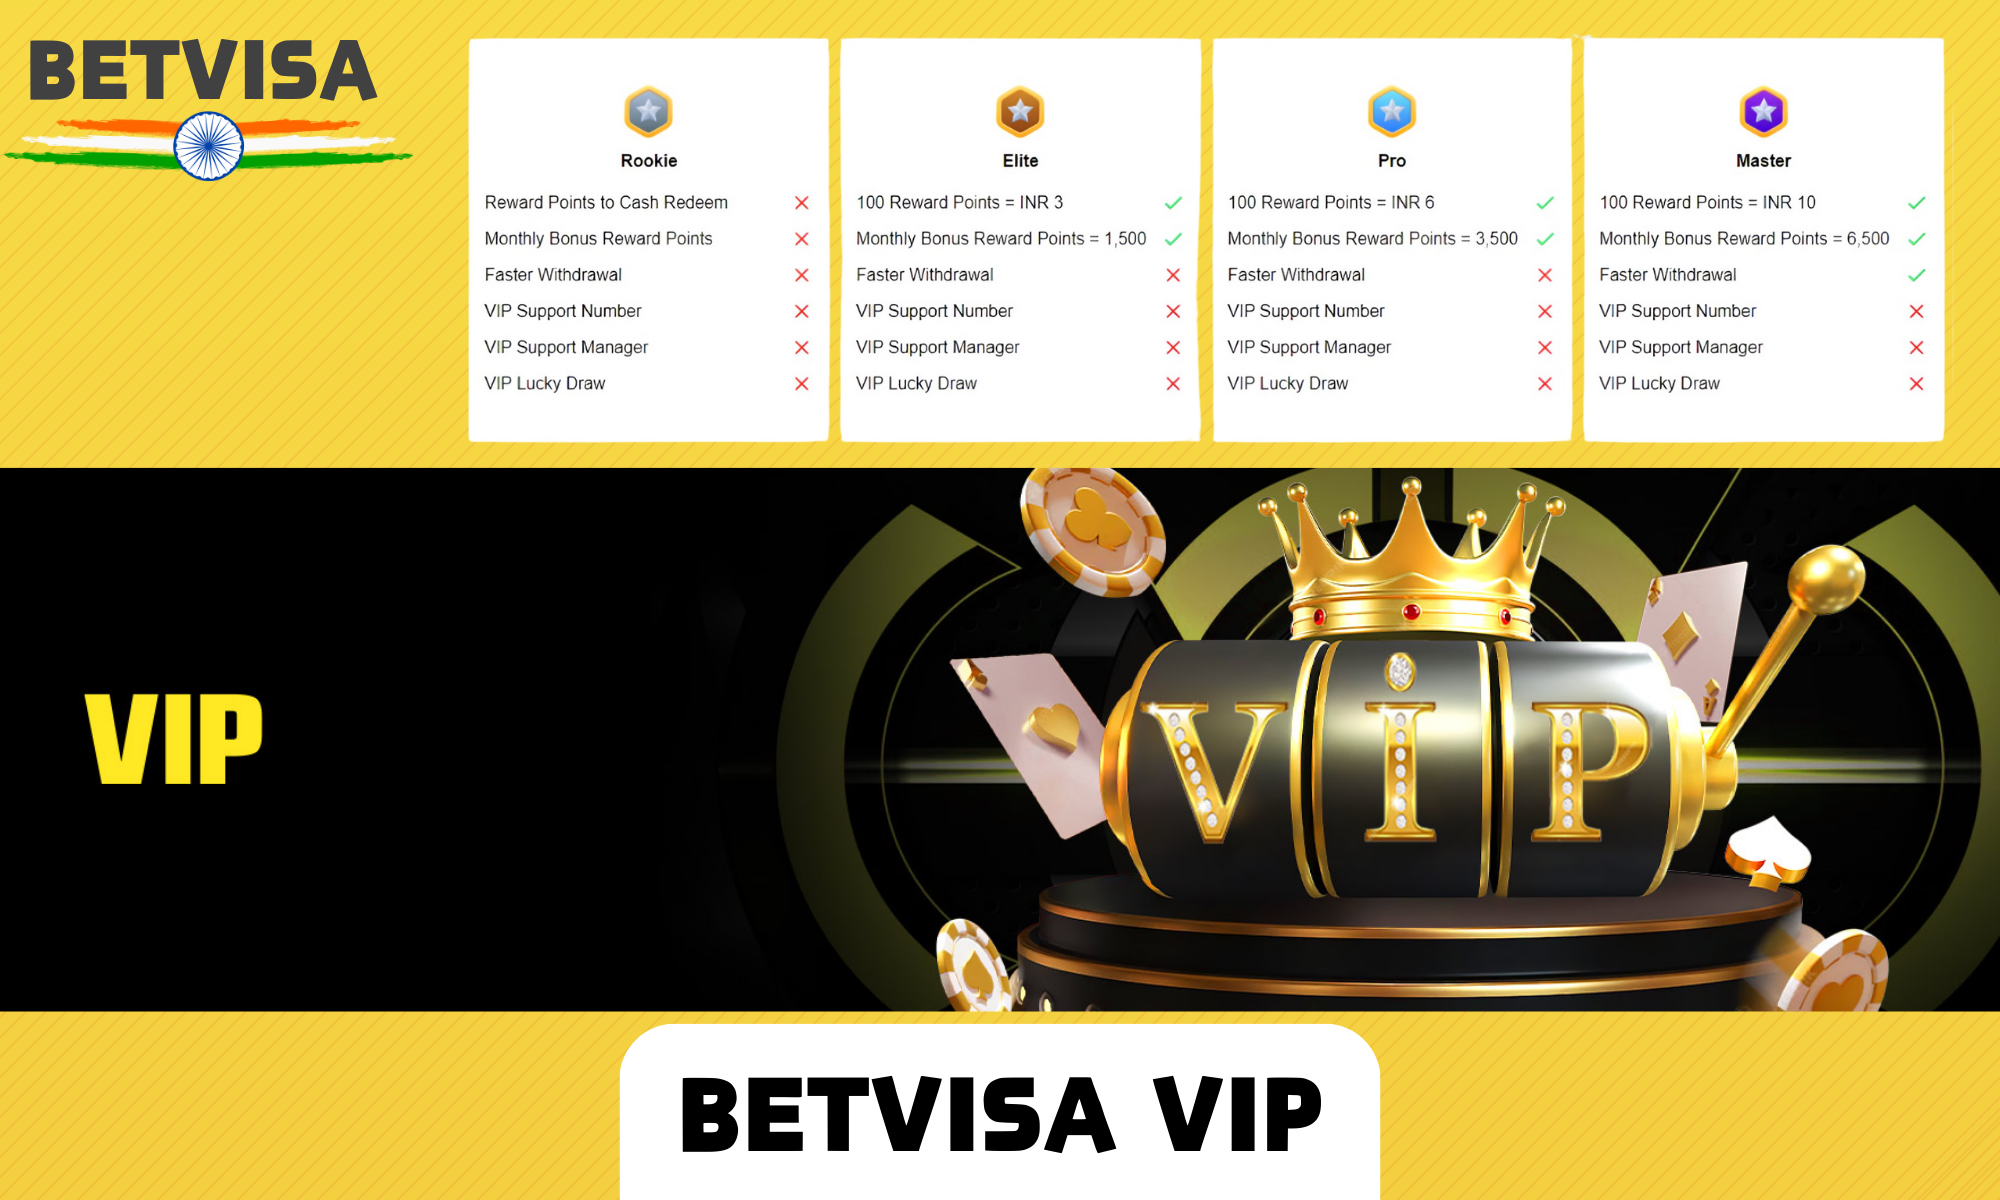 Betvisa VIP program with different levels